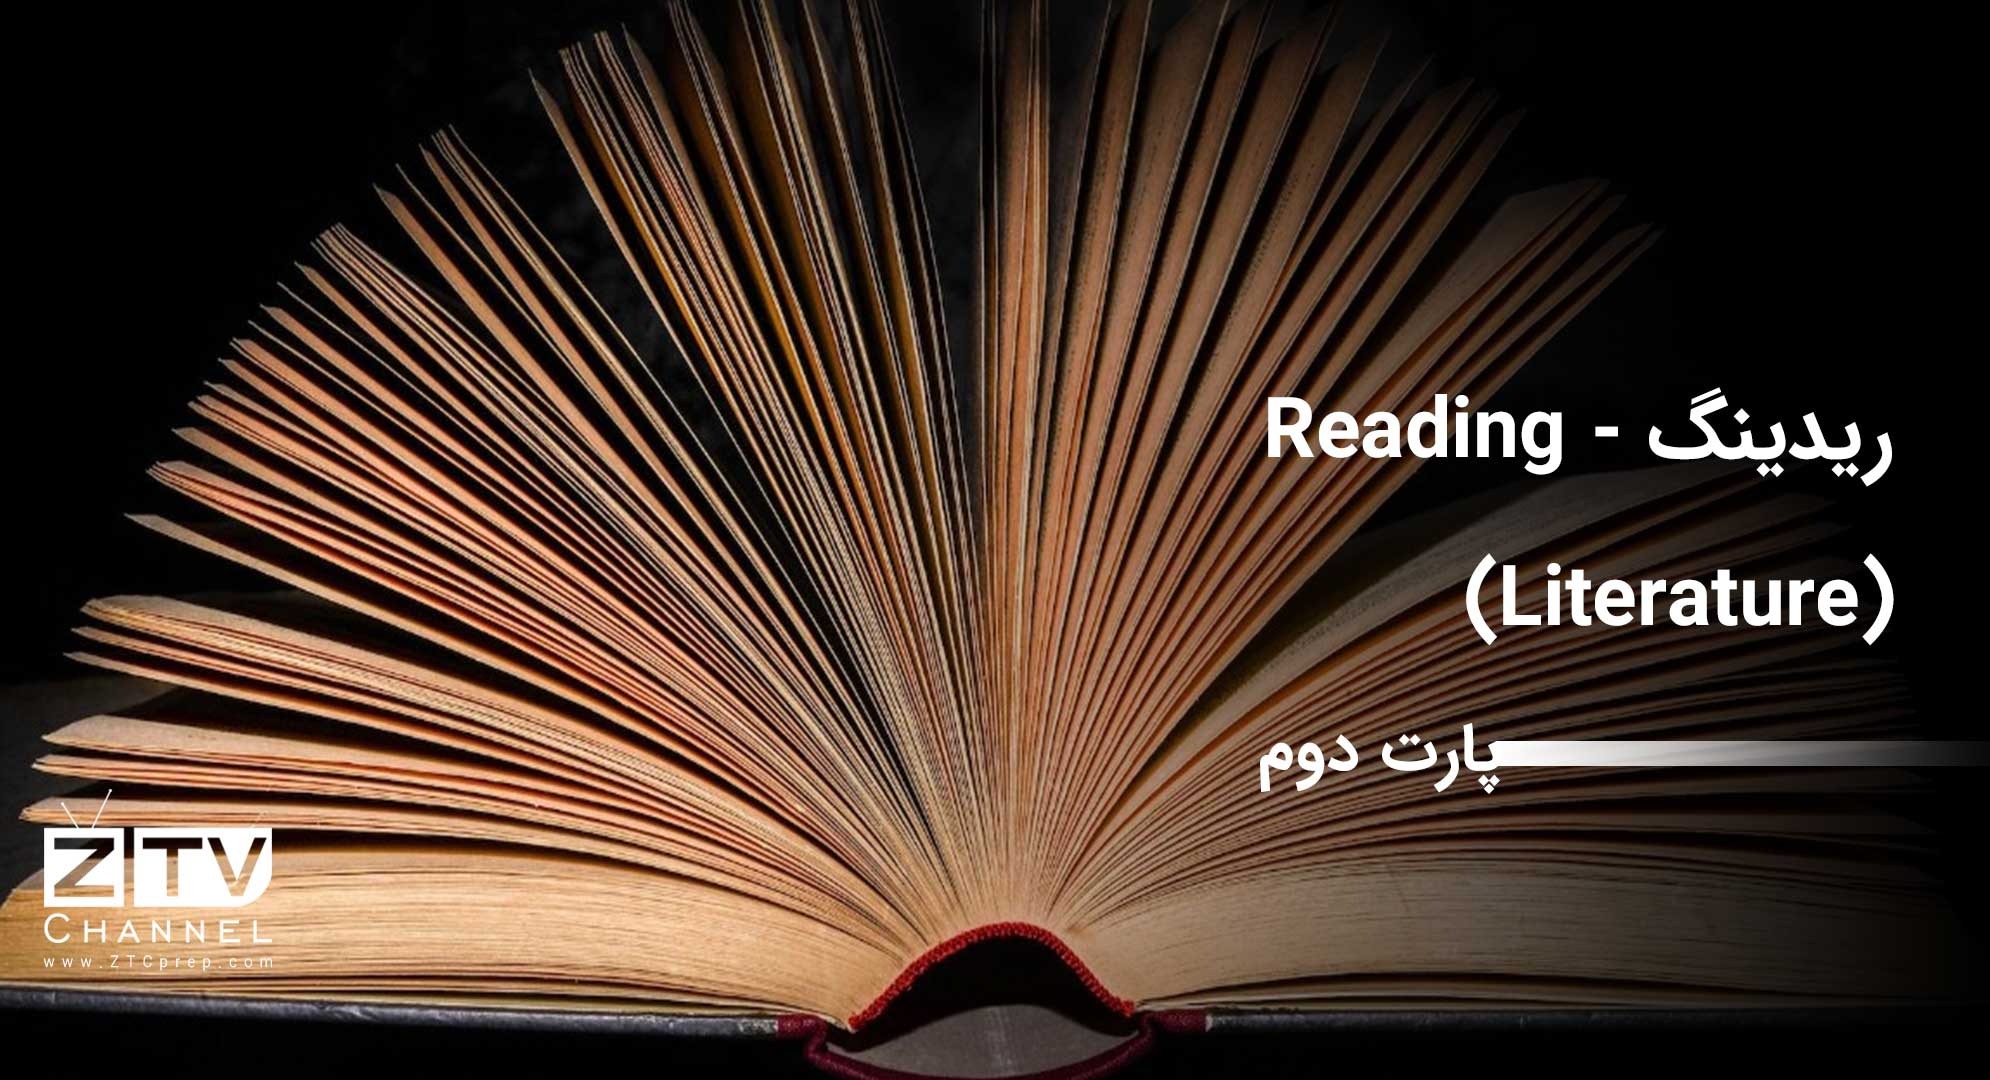 ریدینگ - Reading (Literature) – پارت دوم